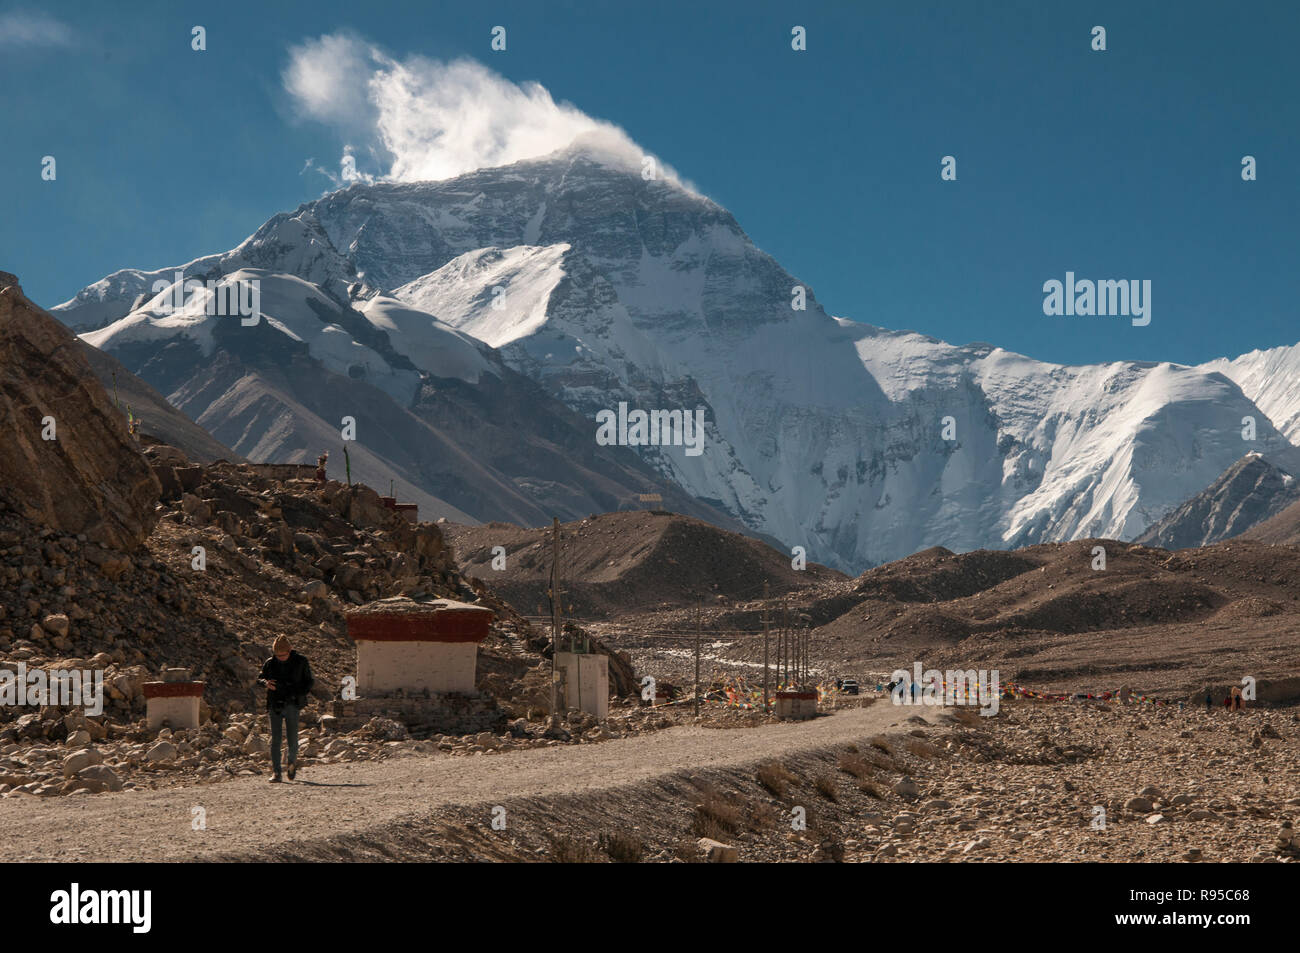 Mt Everest or Qomolangma base camp at 5300m, Qomolangma Nature Reserve, western Tibet, China Stock Photo